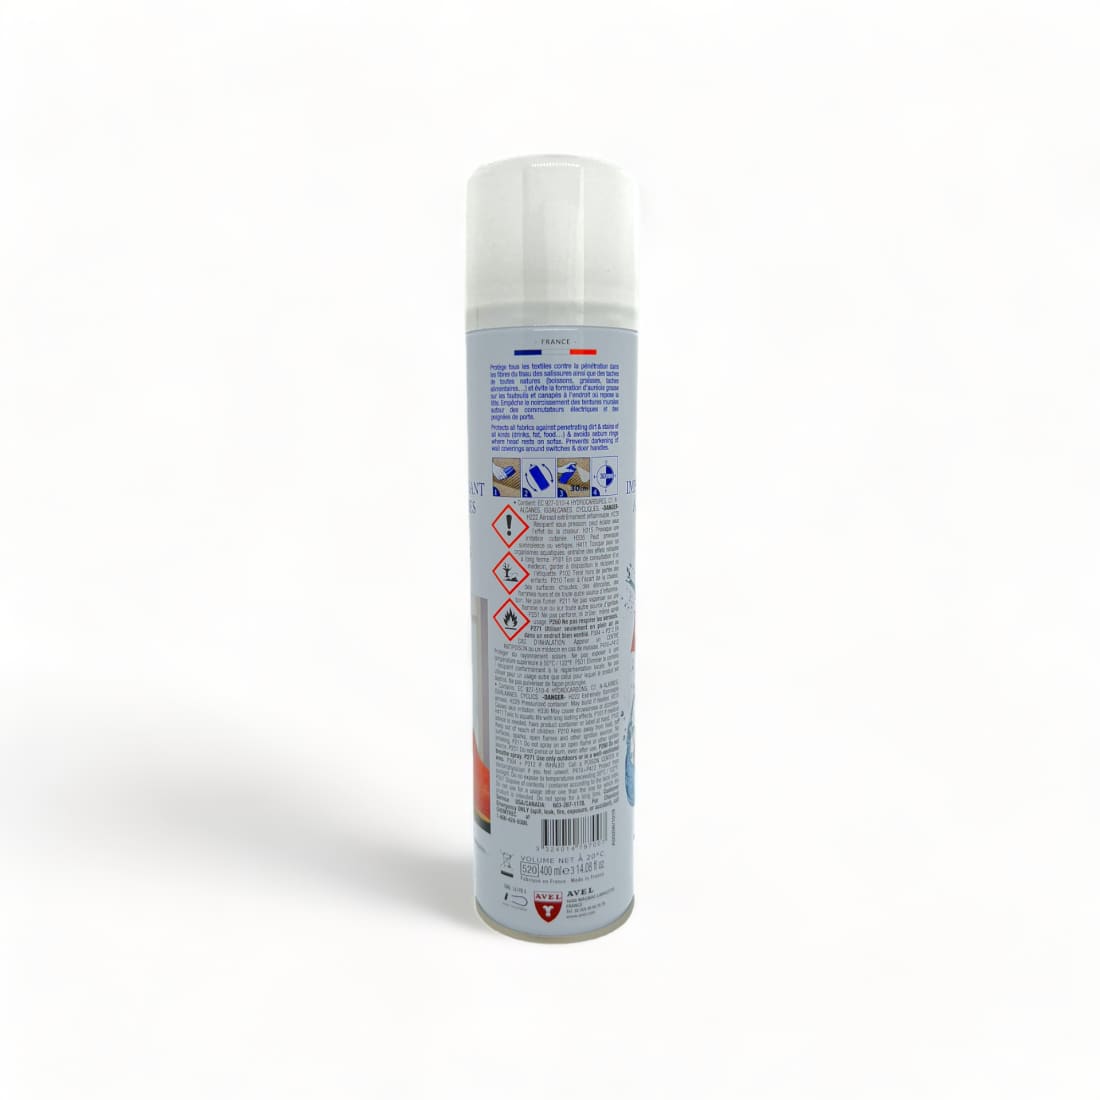 Spray Imperméabilisant Anti-taches Textiles - Avel - 400 ml